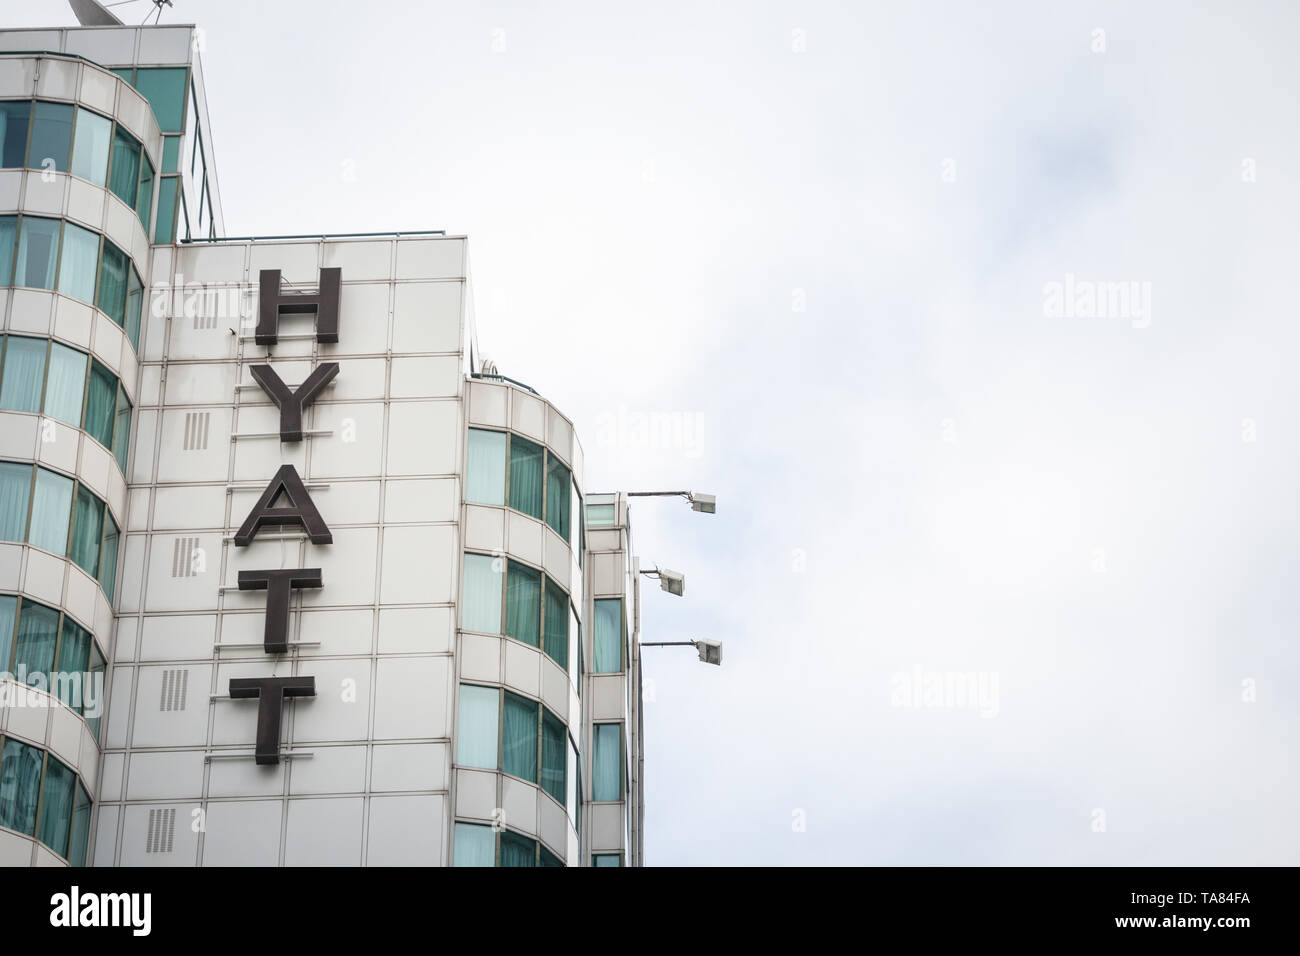 TORONTO, CANADA - NOVEMBER 14, 2018: Hyatt logo on their main hotel in downtown Toronto, Ontario Hyatt Hotels Corporation is a worldwide brand, owner  Stock Photo